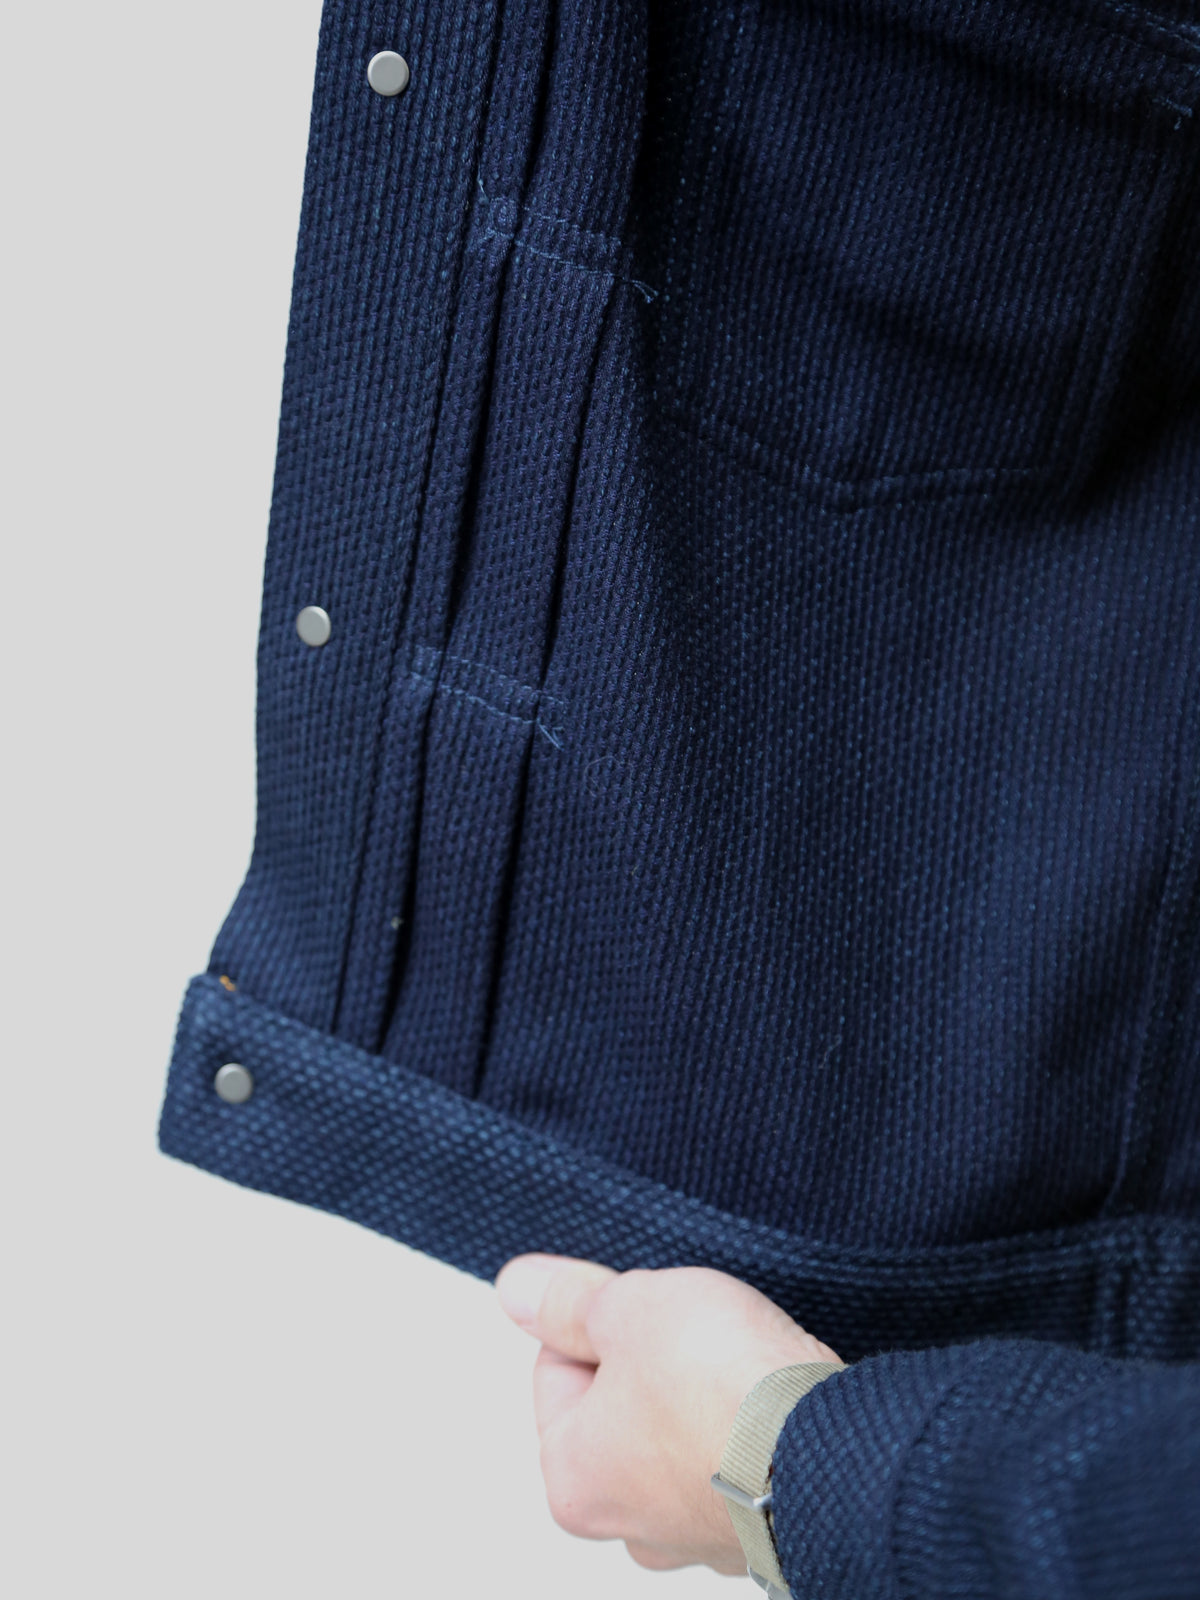 Japan Blue Jeans JBOT11073A Sashiko Jacket - Indigo